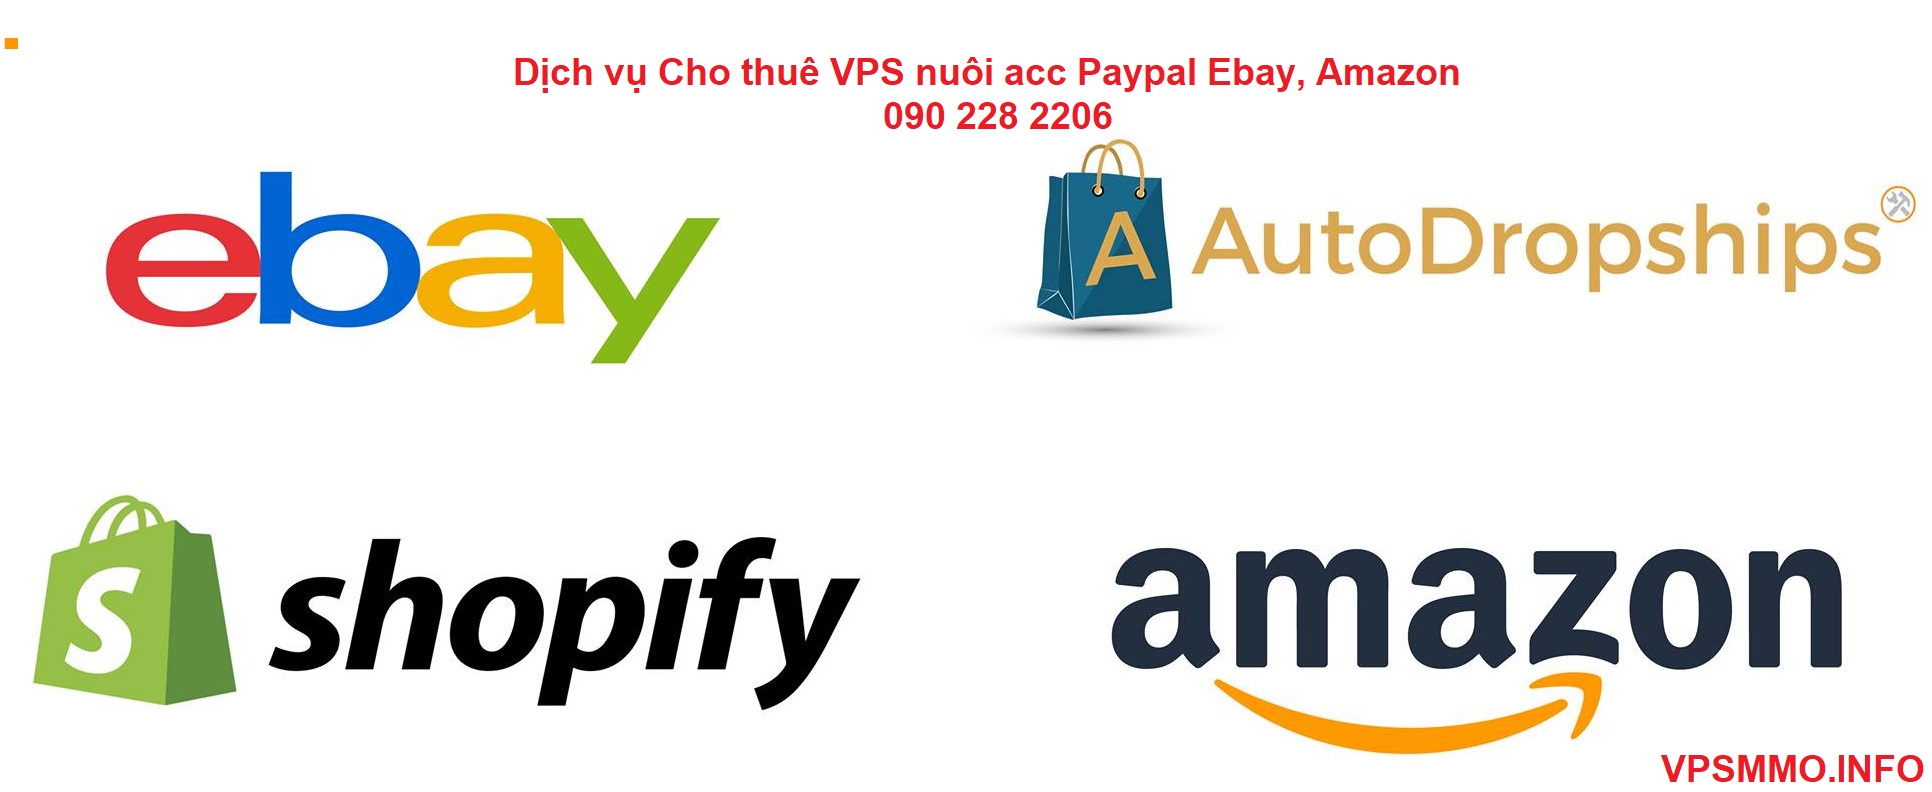 Cho thuê VPS nuôi reg acc Paypal Ebay Amazon Walmart